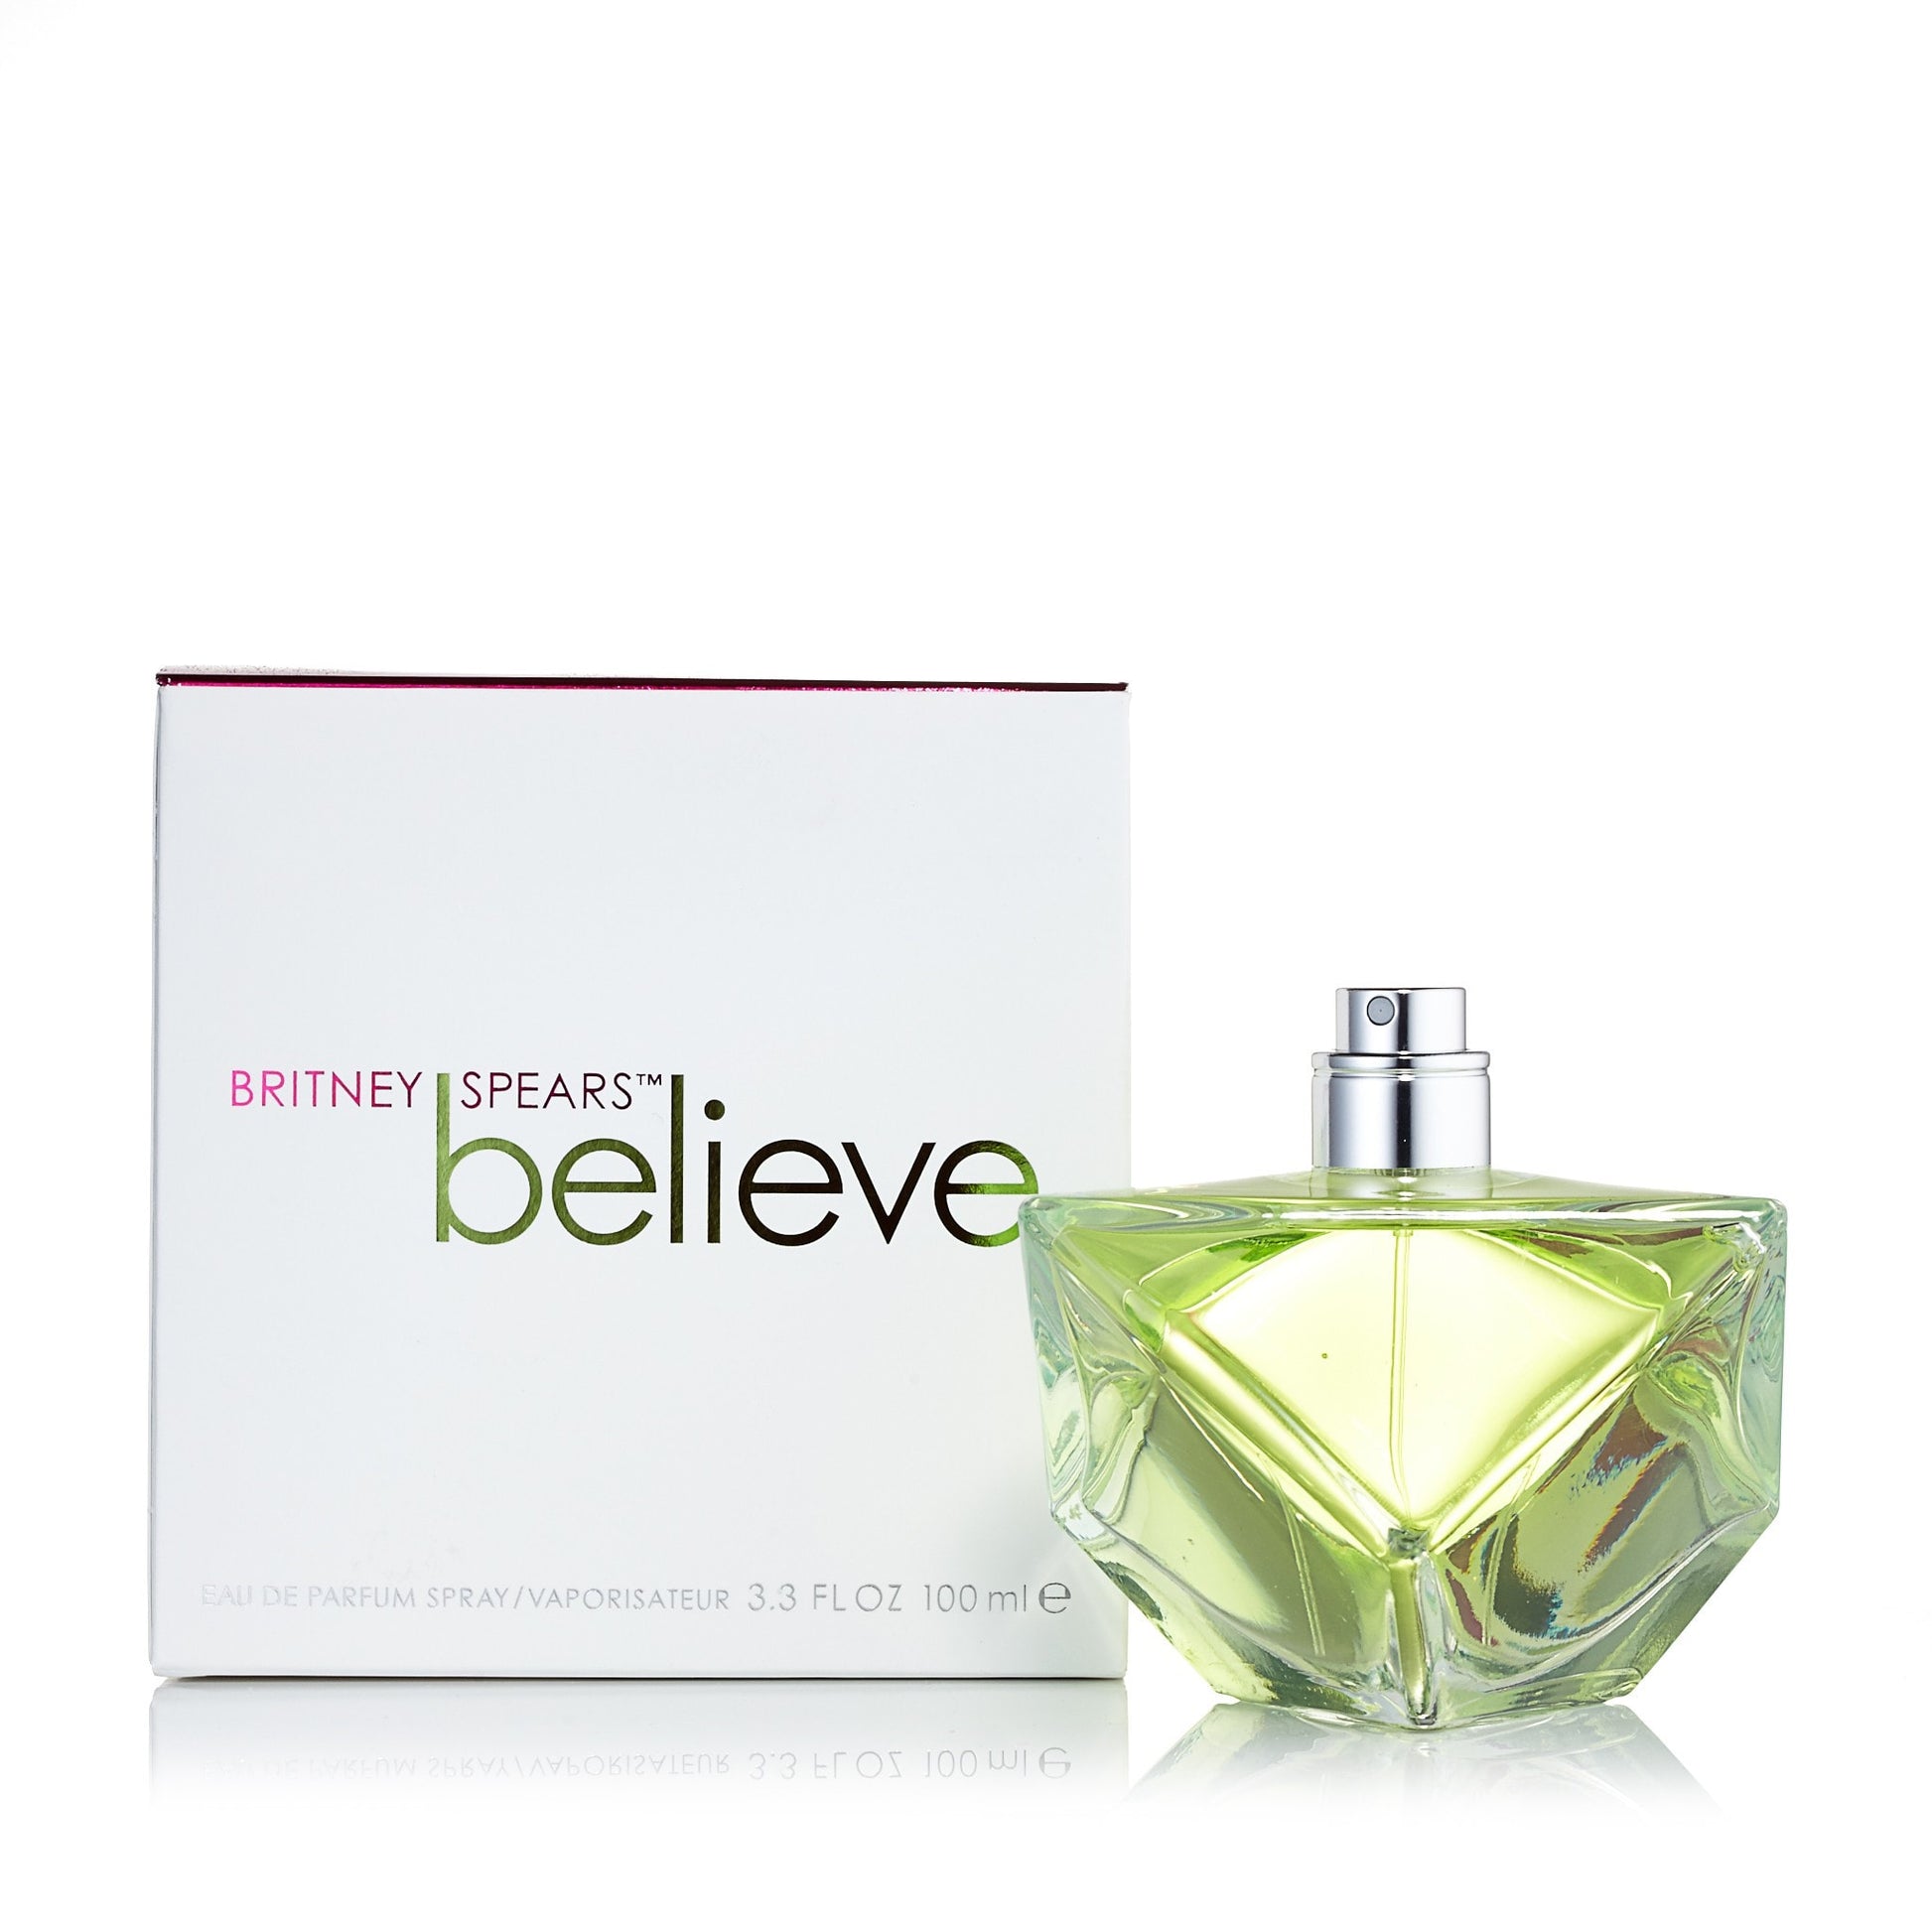 Believe Eau de Parfum Spray for Women by Britney Spears, Product image 2